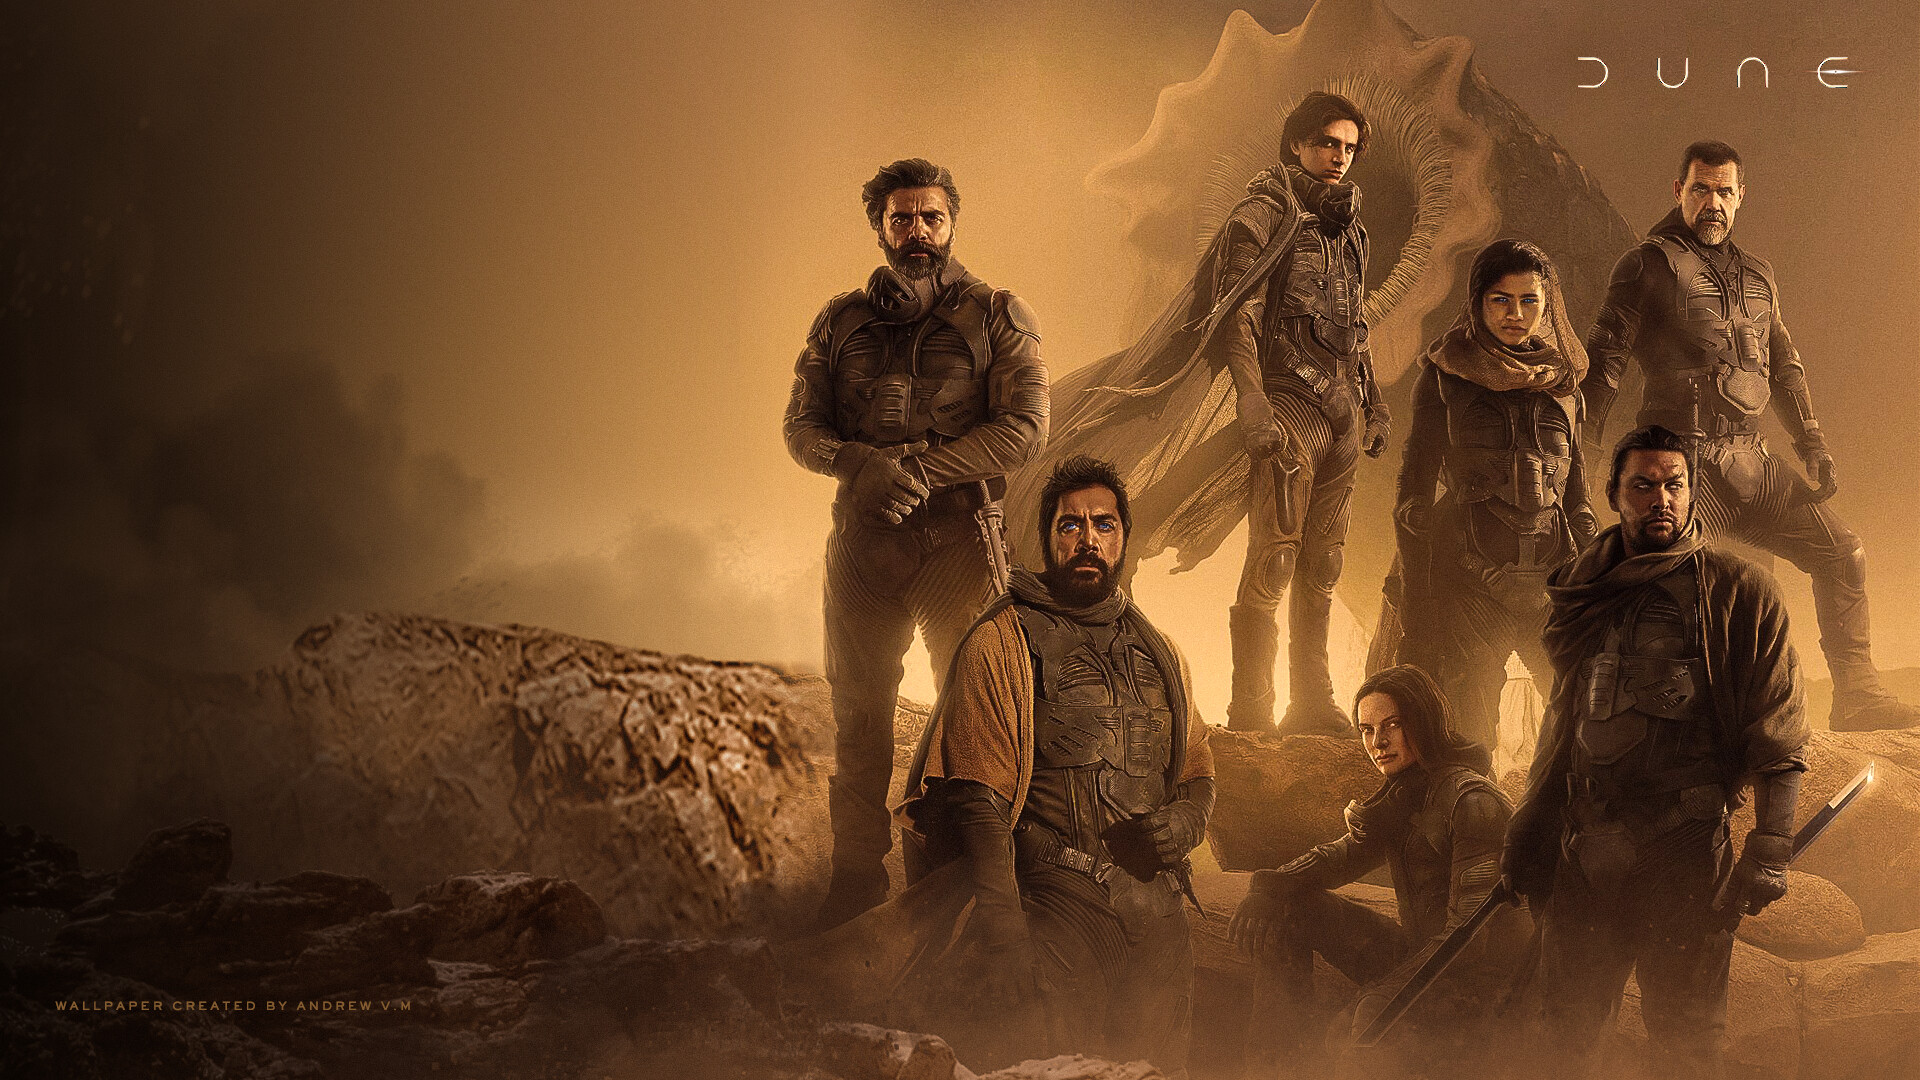 Dune (2021): Set against the backdrop of Arrakis, a desert planet home to the Fremen, Movie. 1920x1080 Full HD Background.